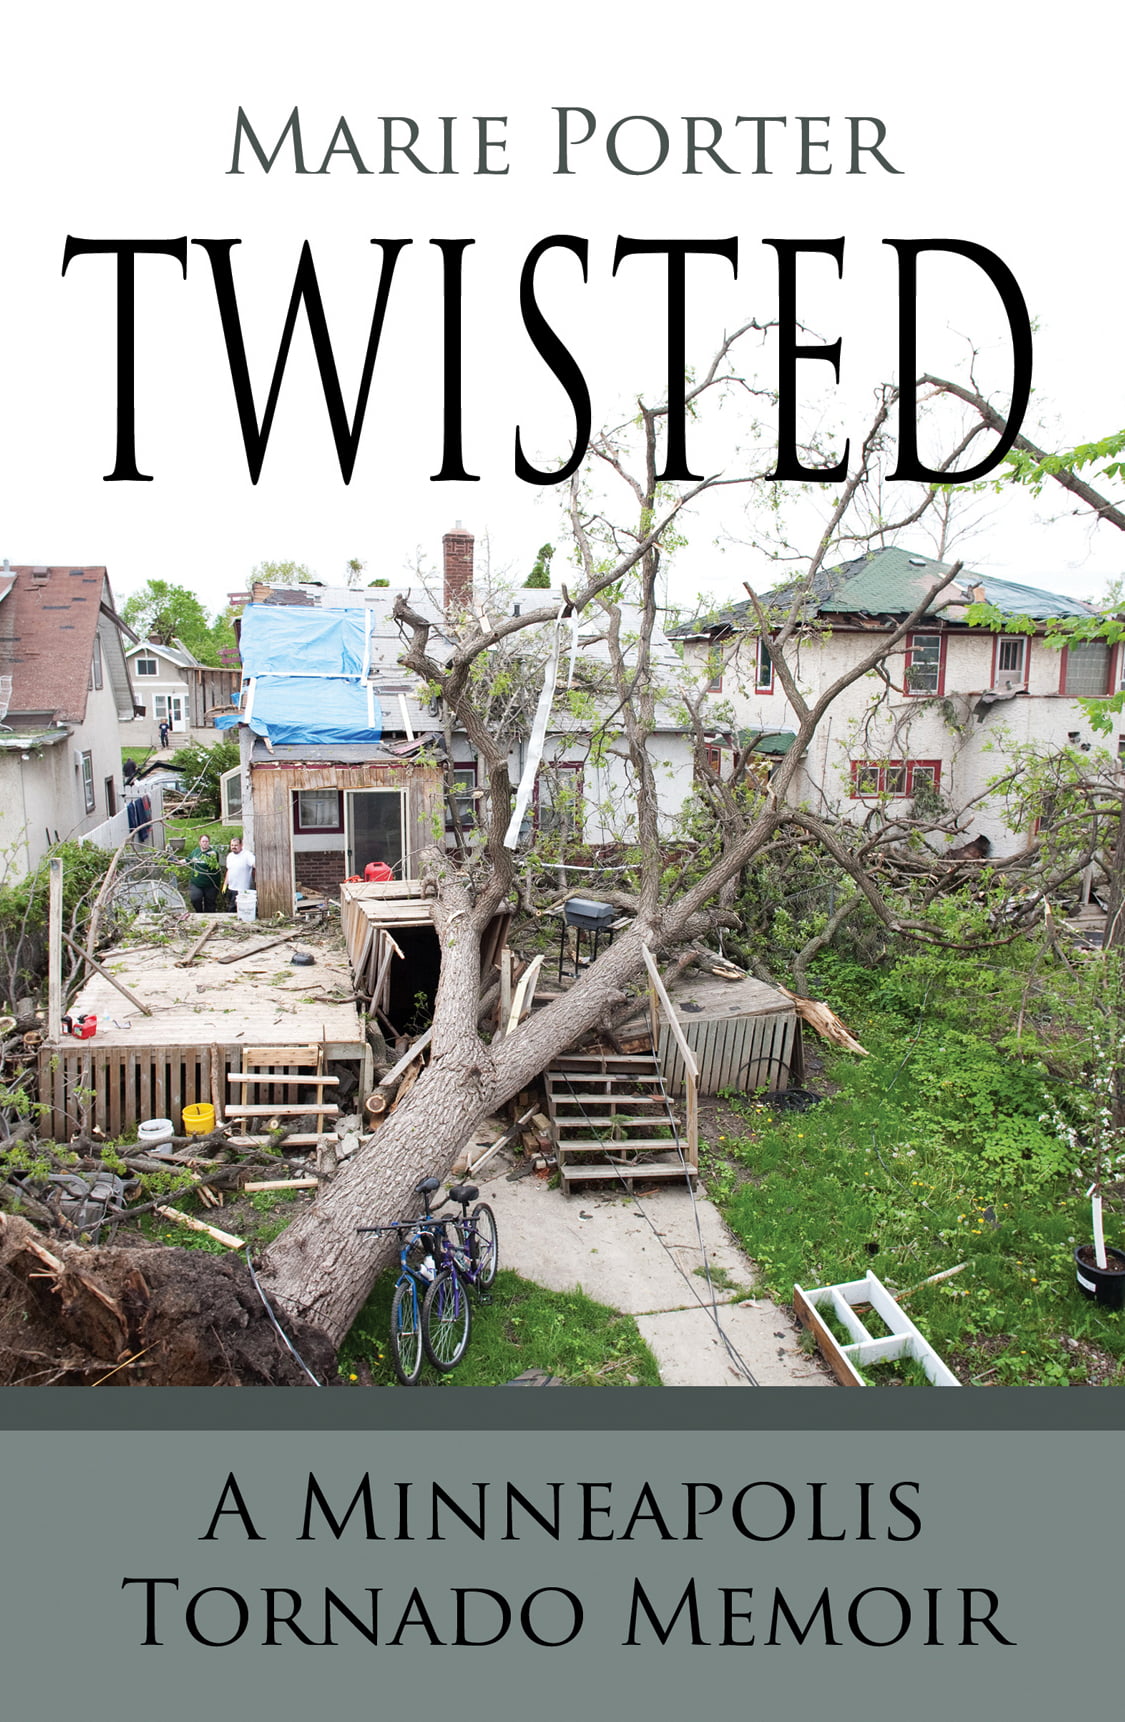 Cover image for "Twisted: A Minneapolis Tornado Memoir".